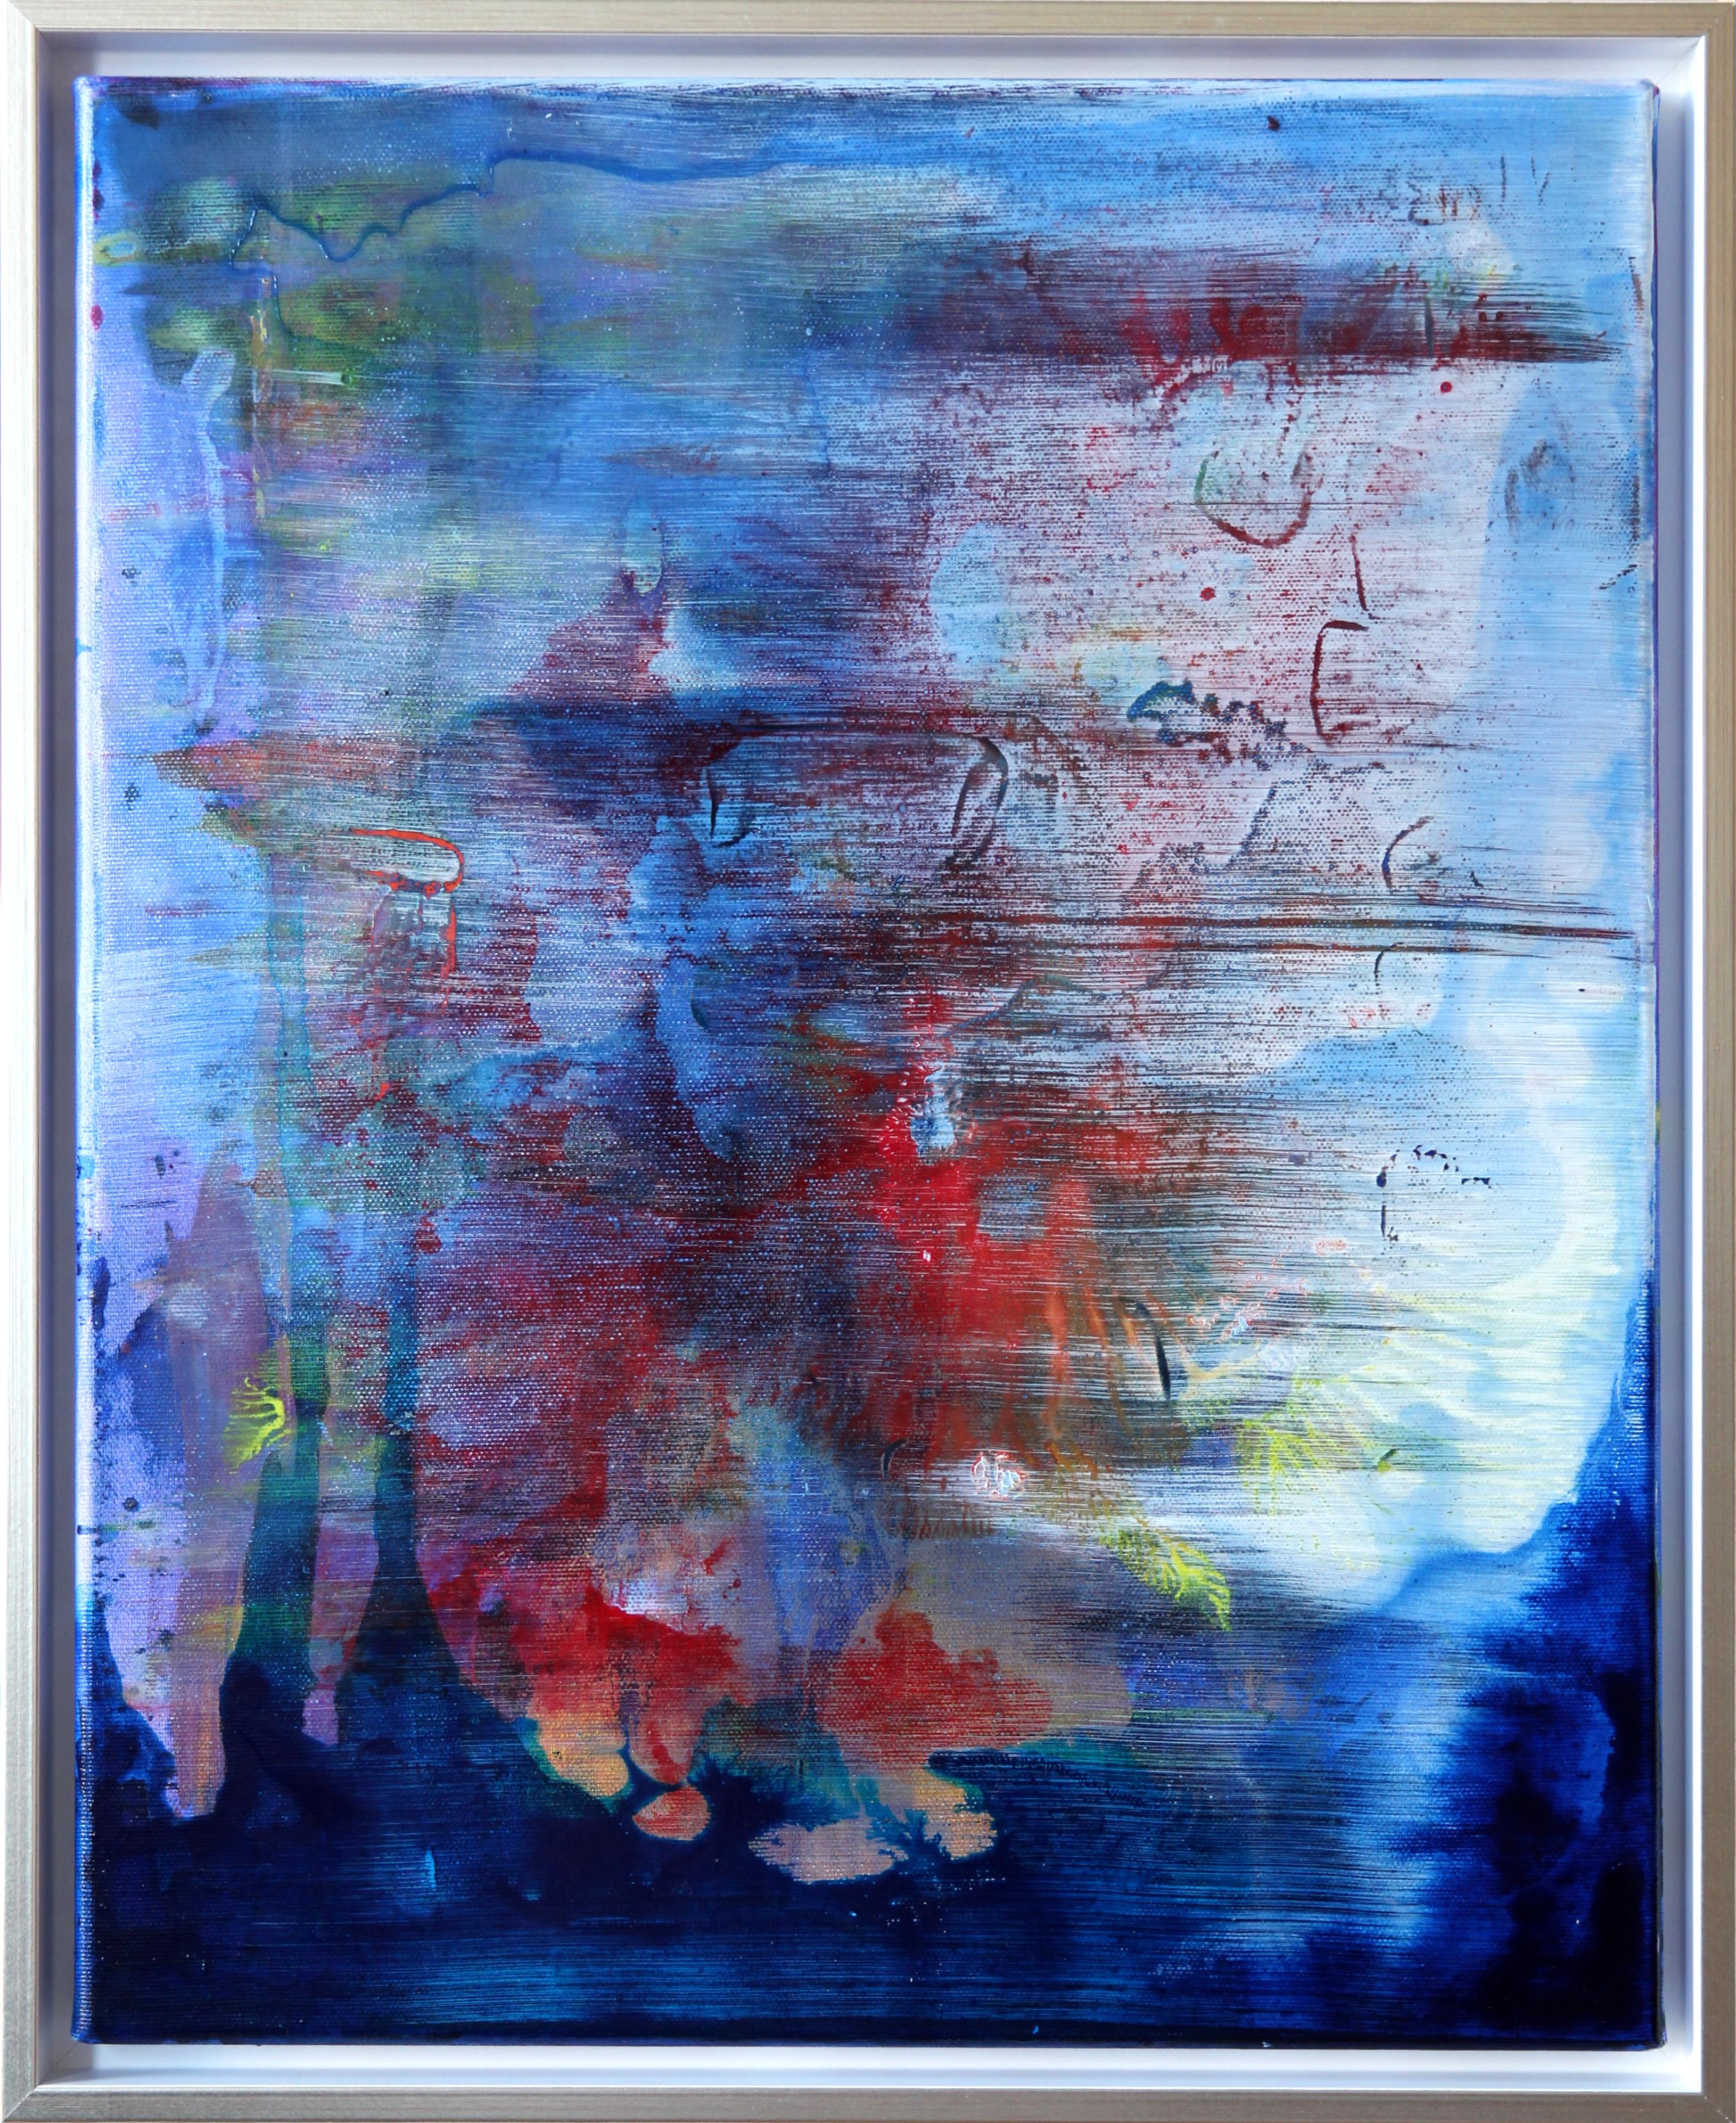 "Ocean of phantasie" Abstract Paint 2021 by Udo Haderlein